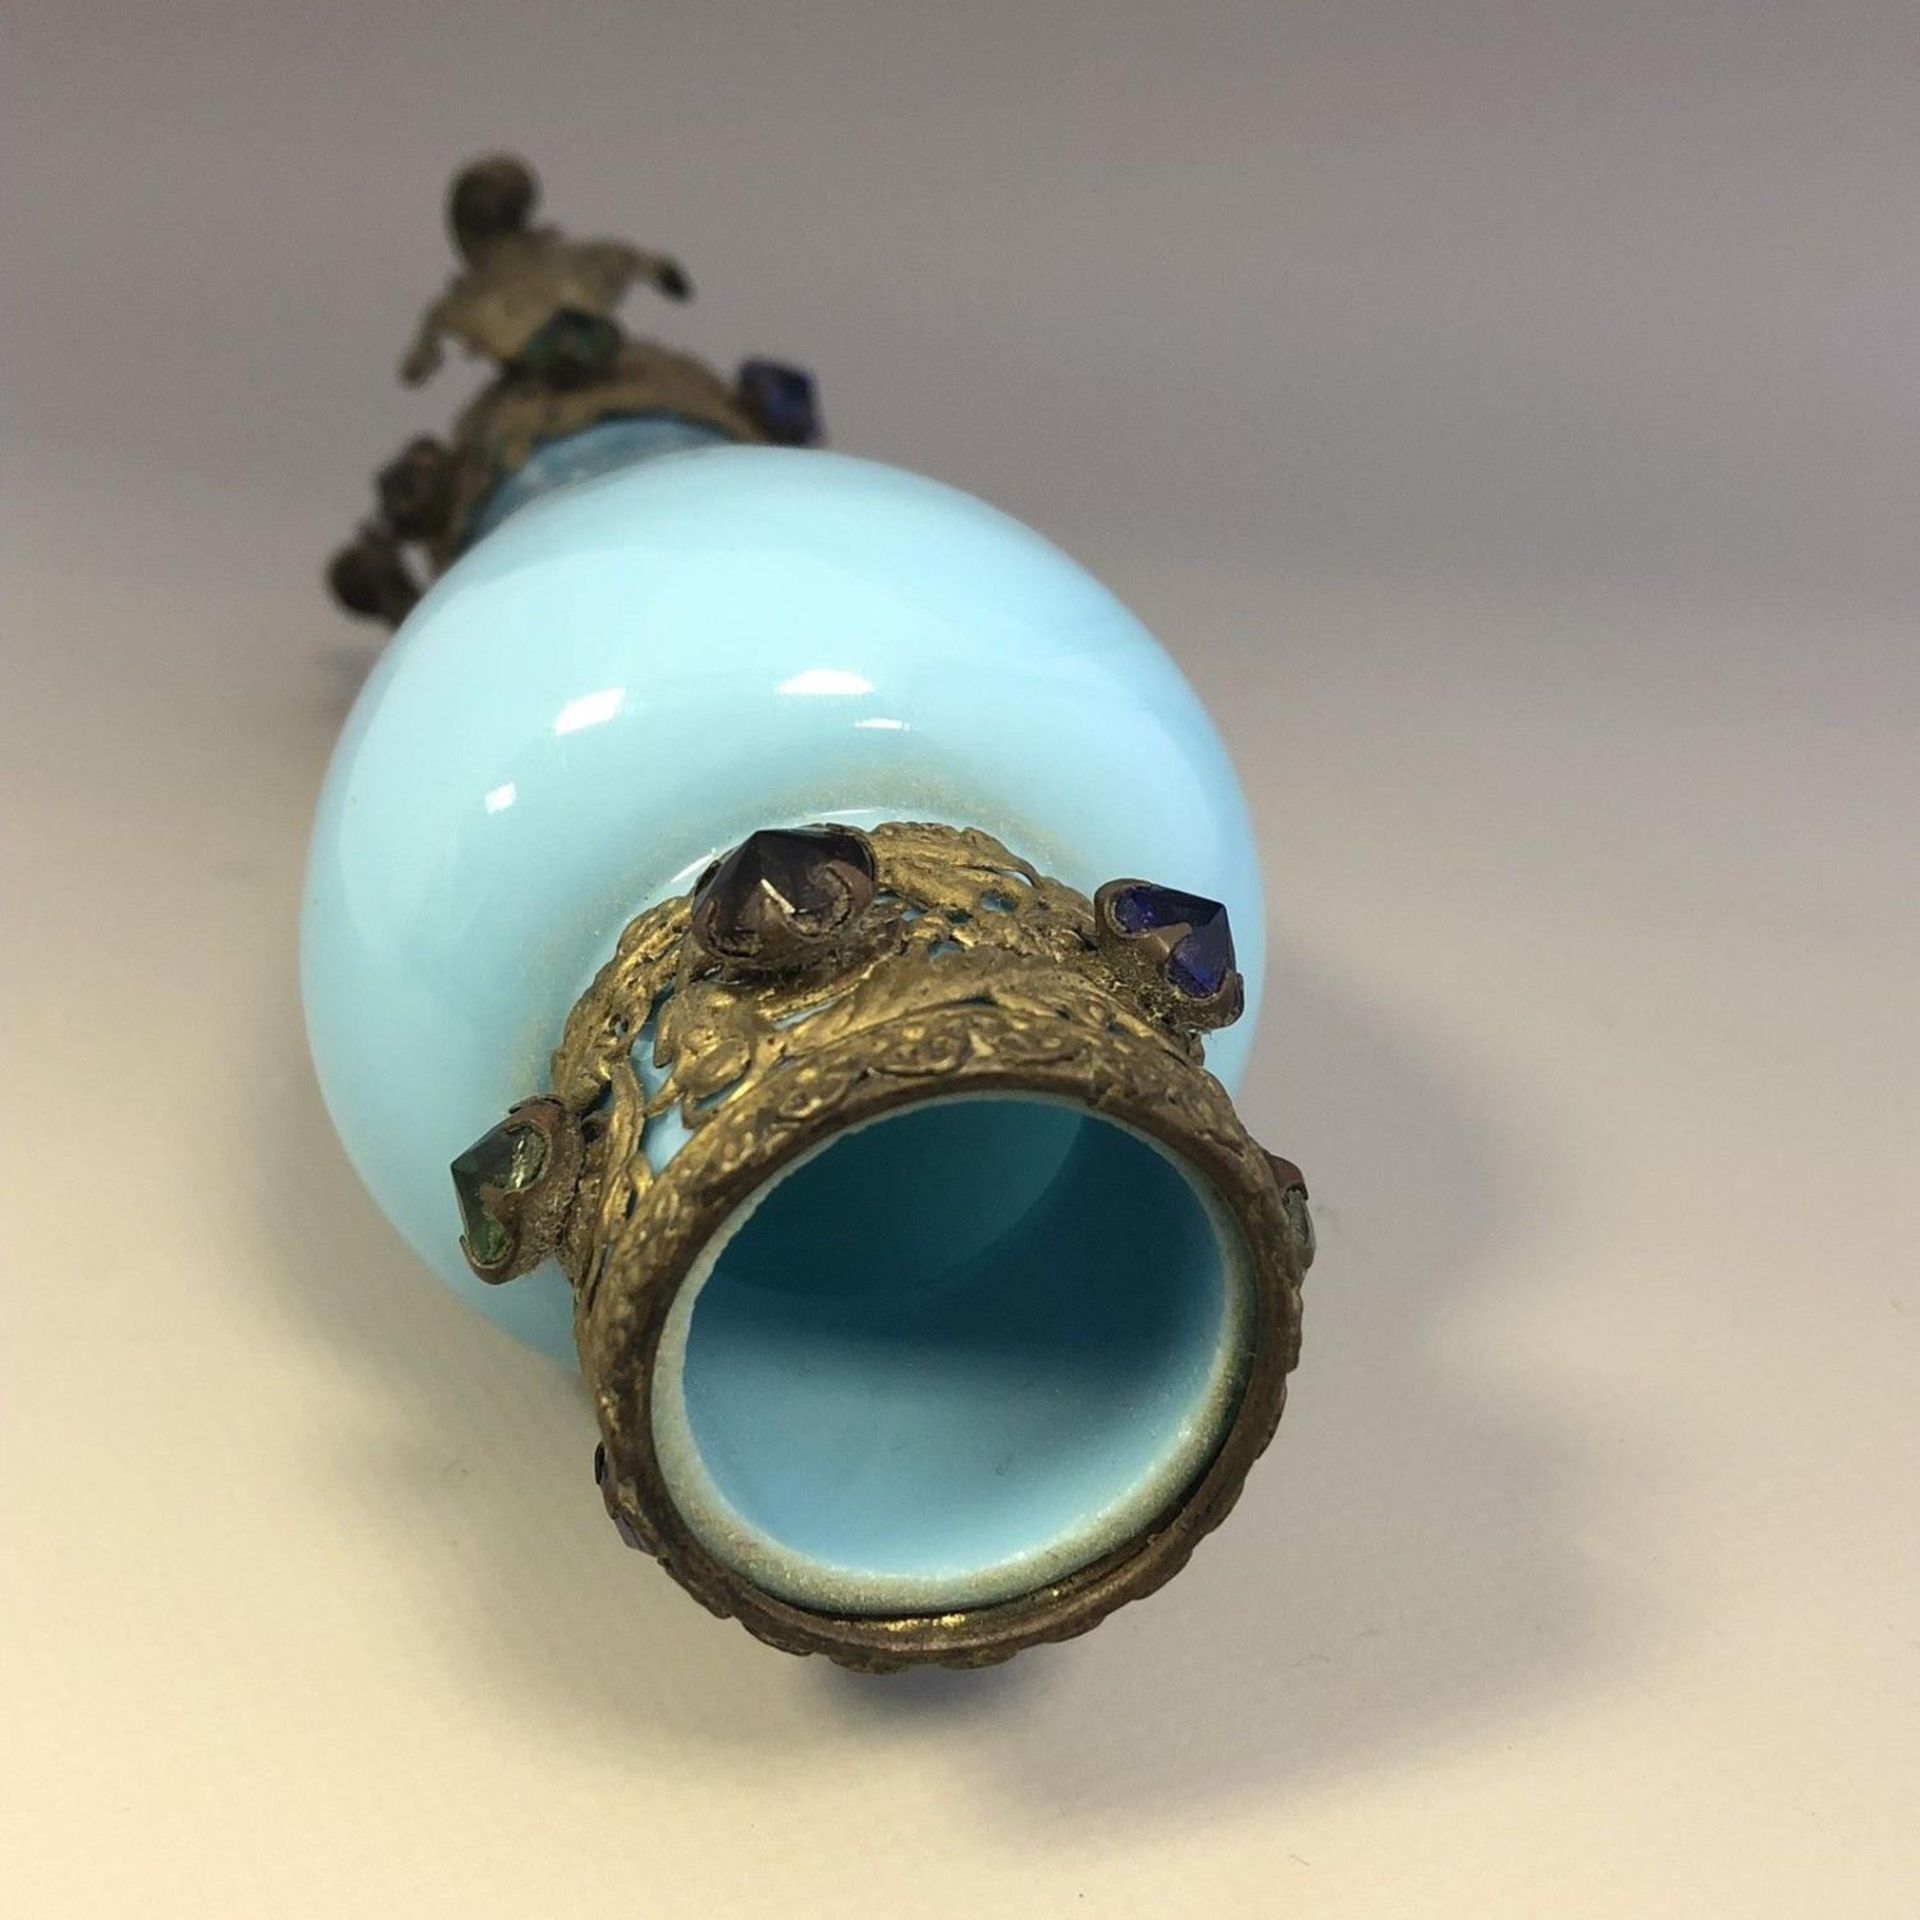 French blue opaline glass vase/perfume bottle gilt metal jewelled mounts - 19thC - Image 2 of 4